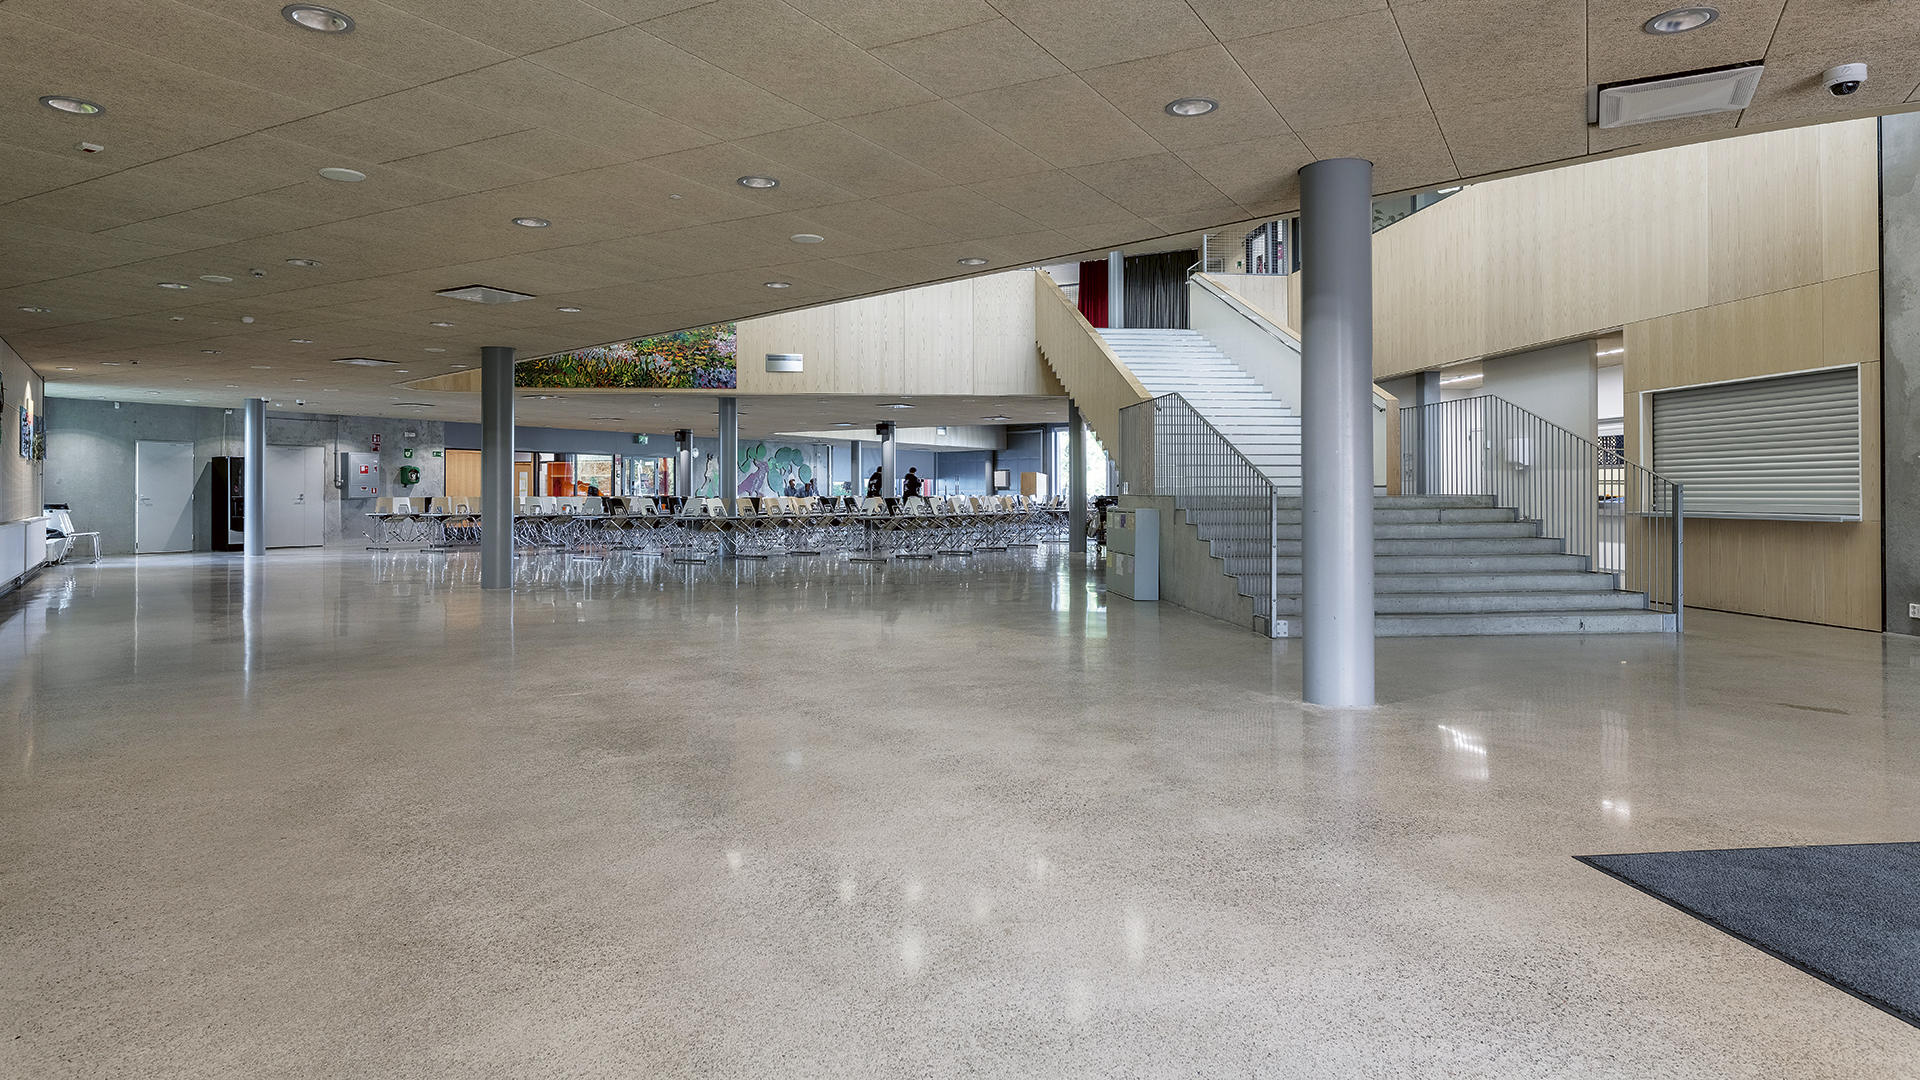 Durable concrete floors in school buildings